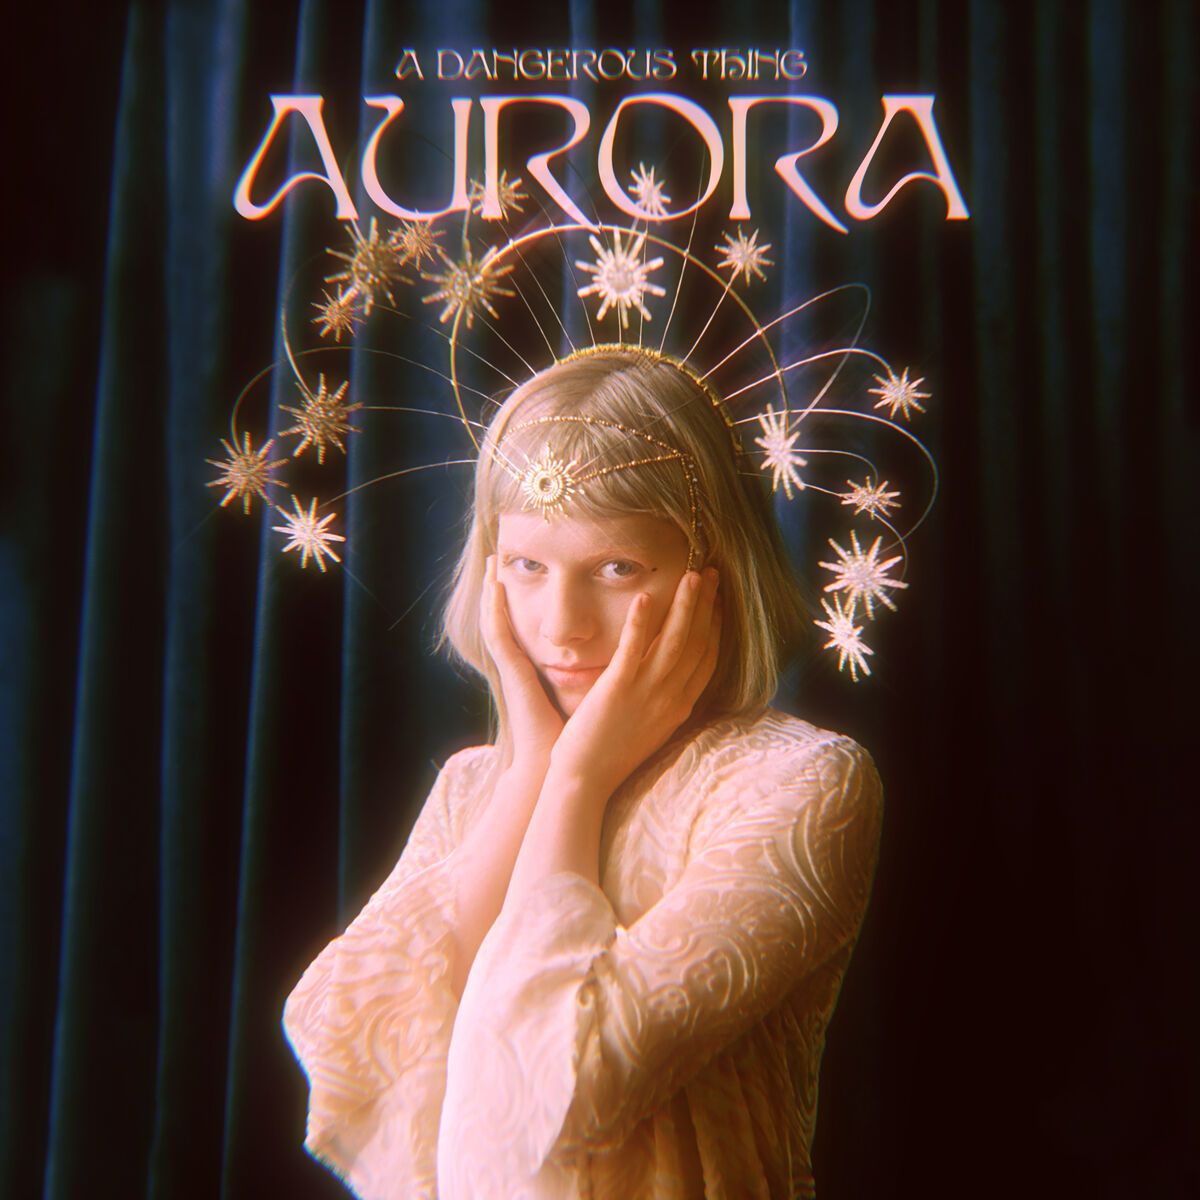 A Temporary High, Aurora Aksnes Wiki